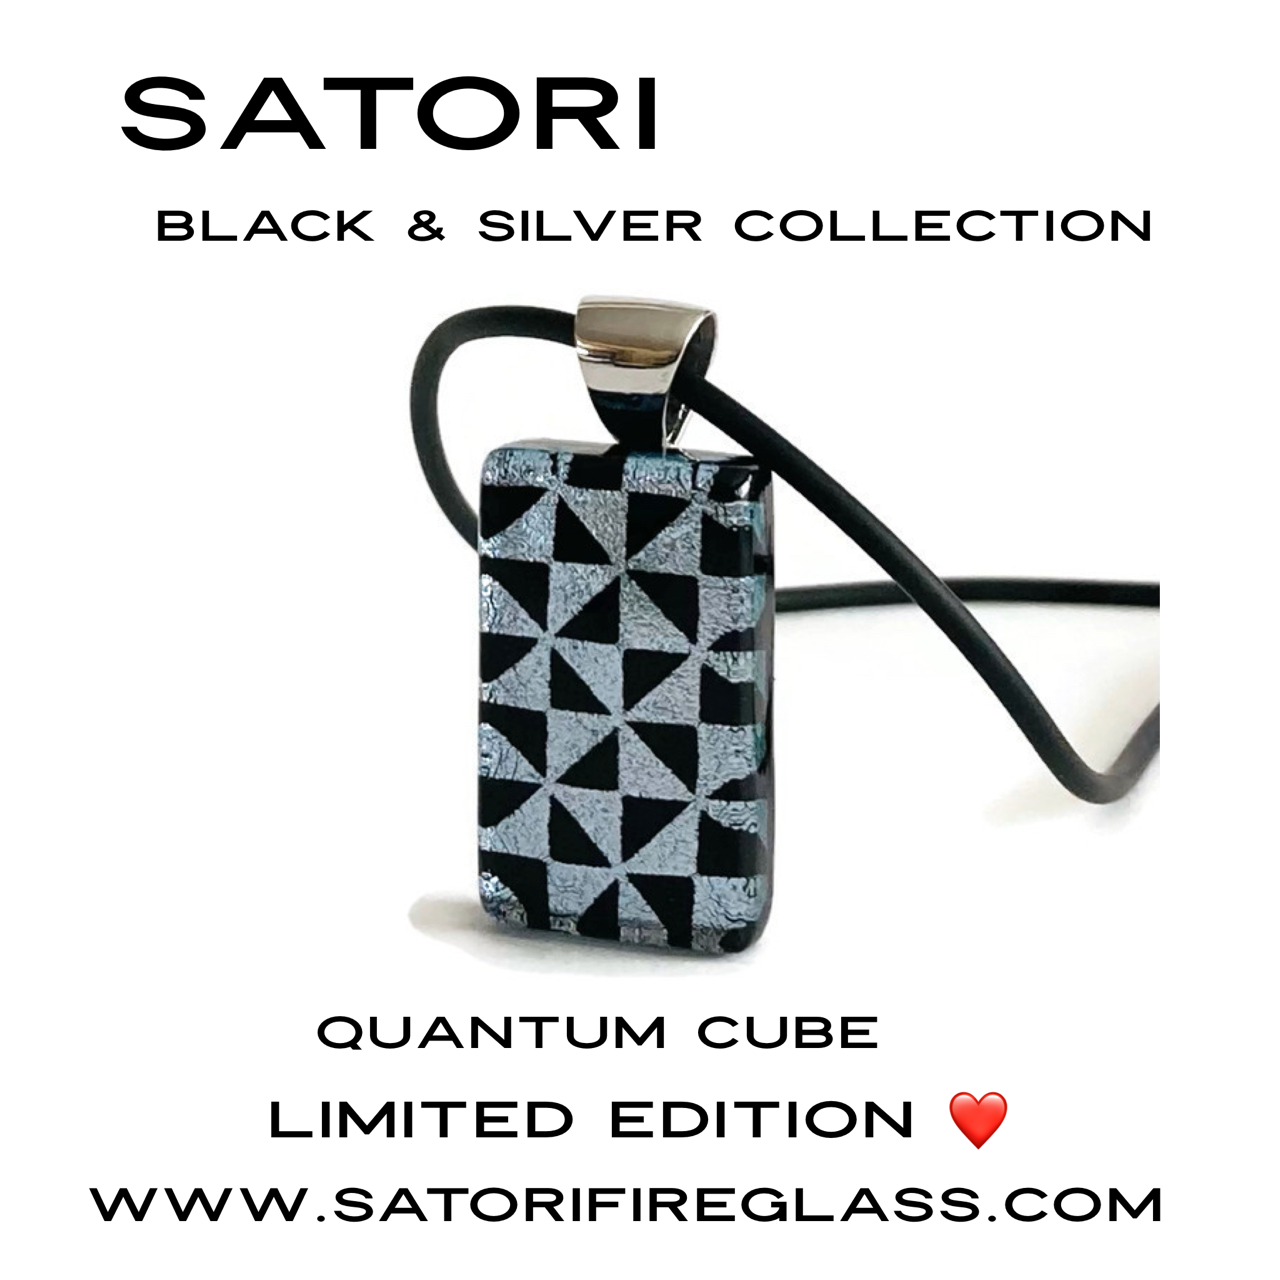 Satori Black & Silver Quantum Cube